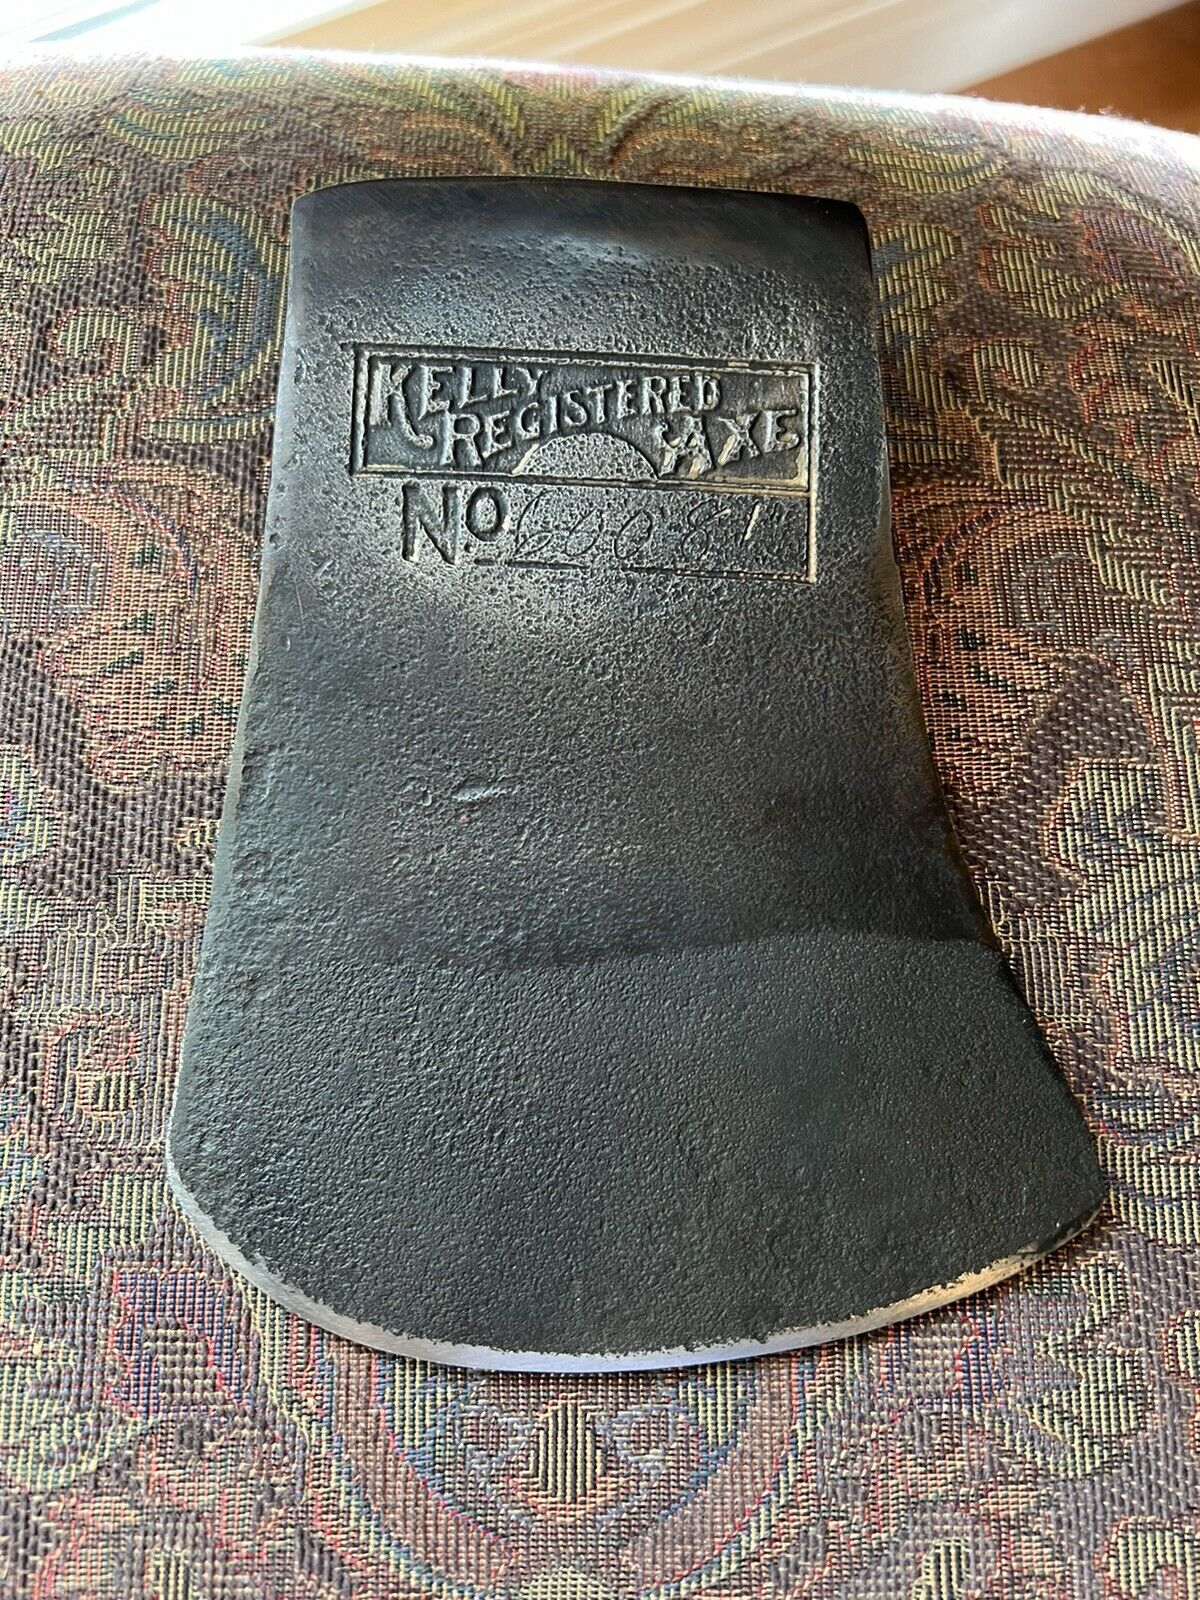 Vintage Original Kelly Registered Single Bit Axe Head